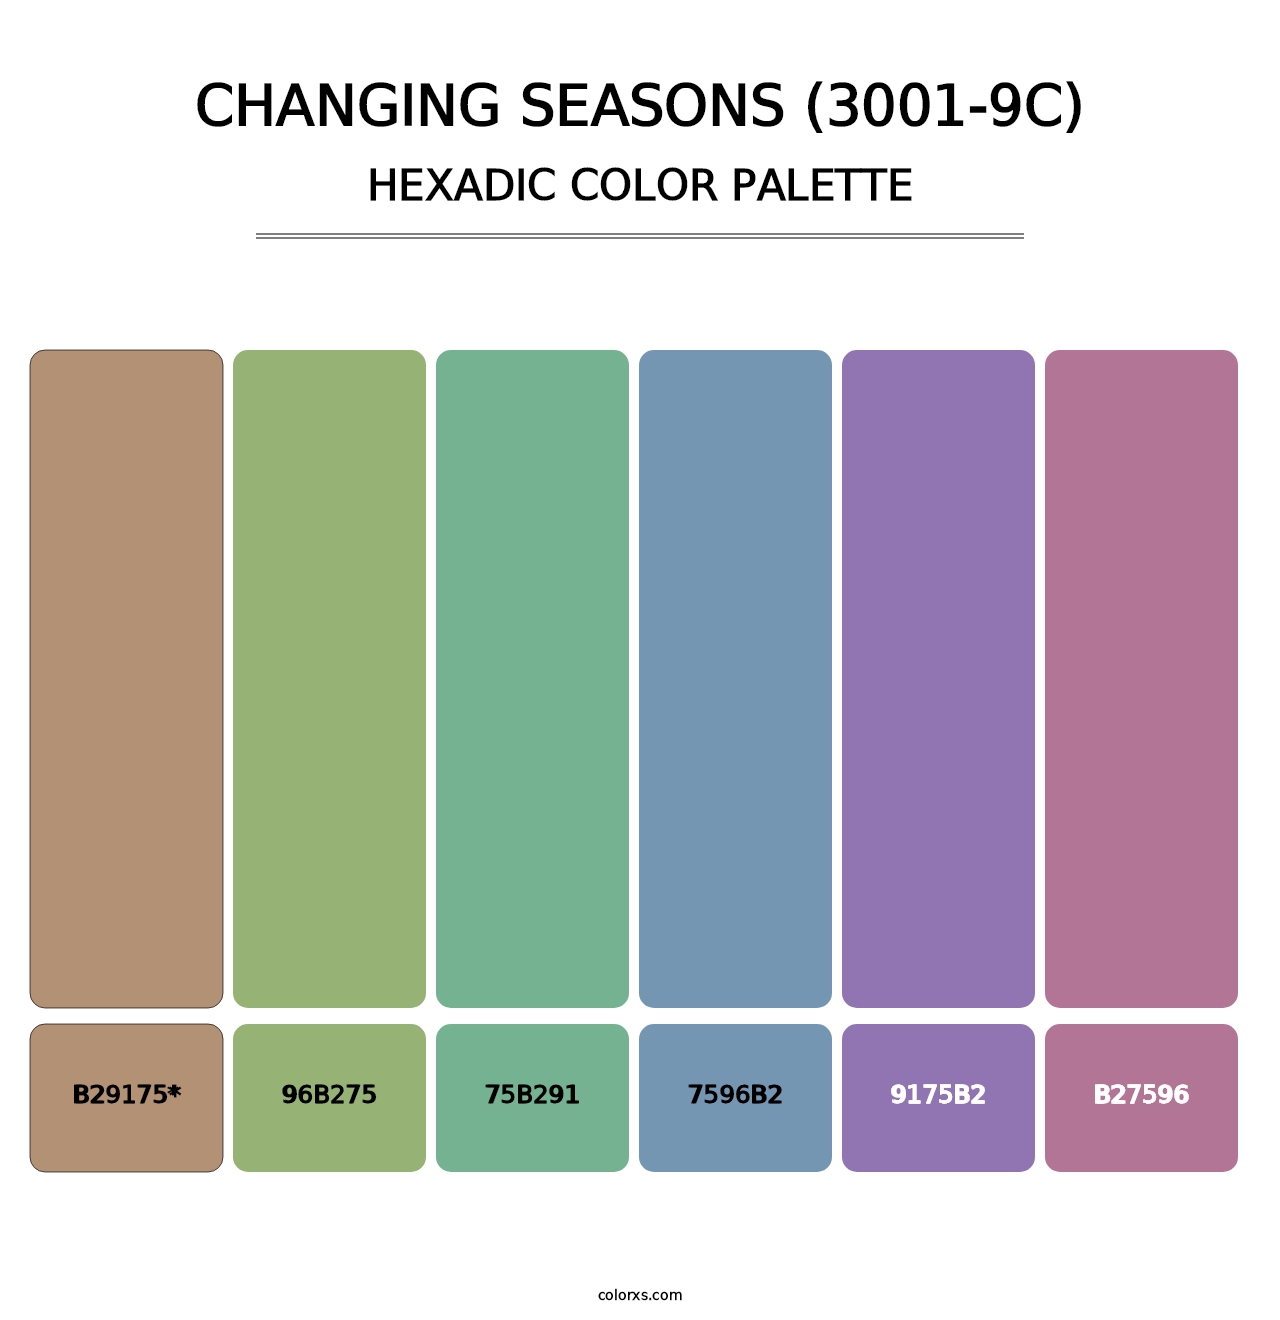 Changing Seasons (3001-9C) - Hexadic Color Palette